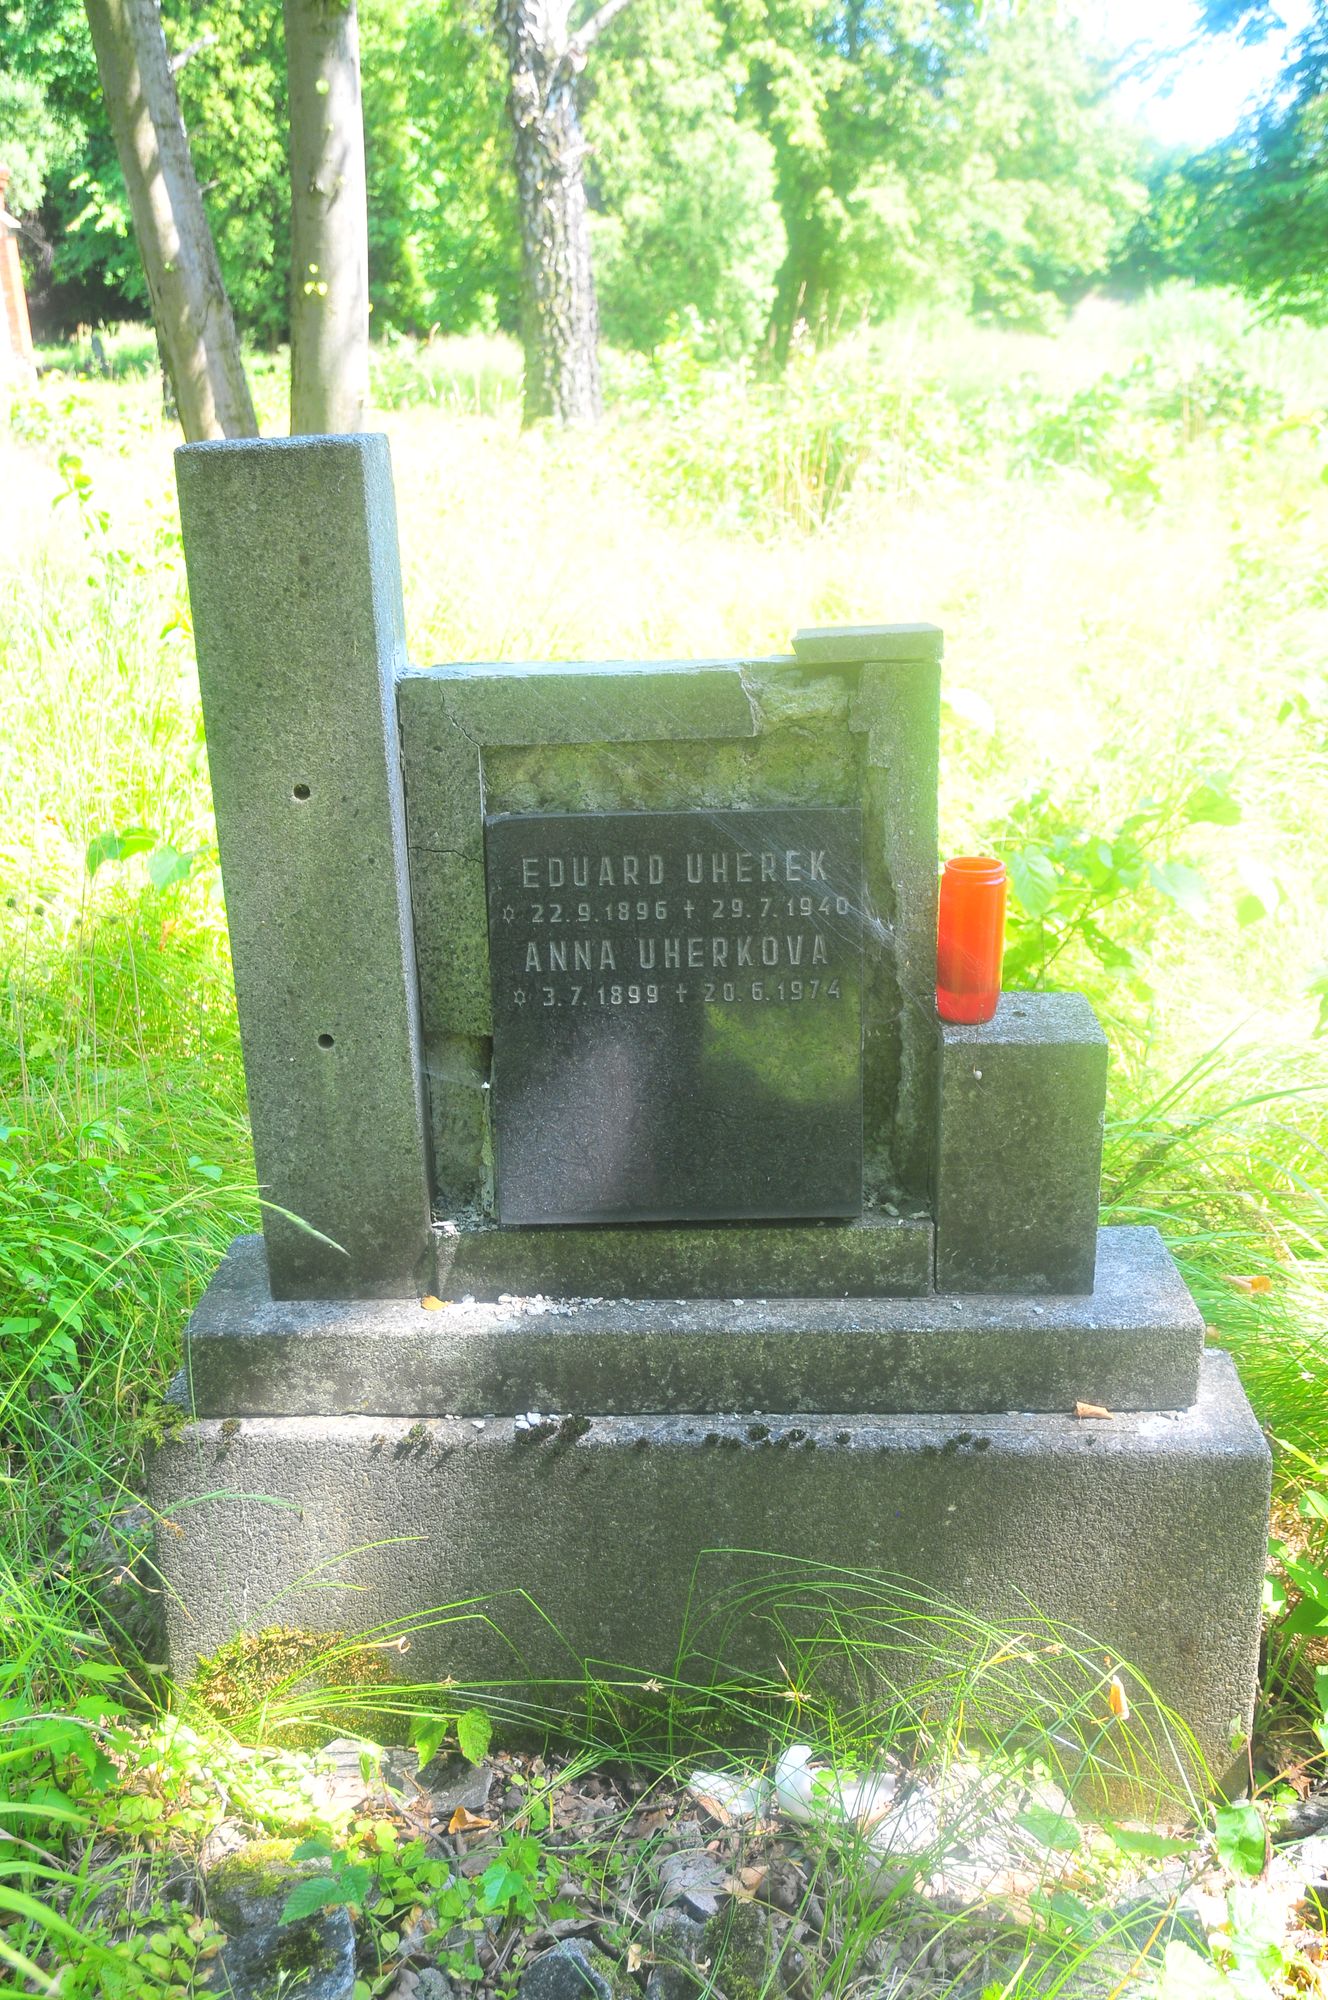 Tombstone of the Cherek family